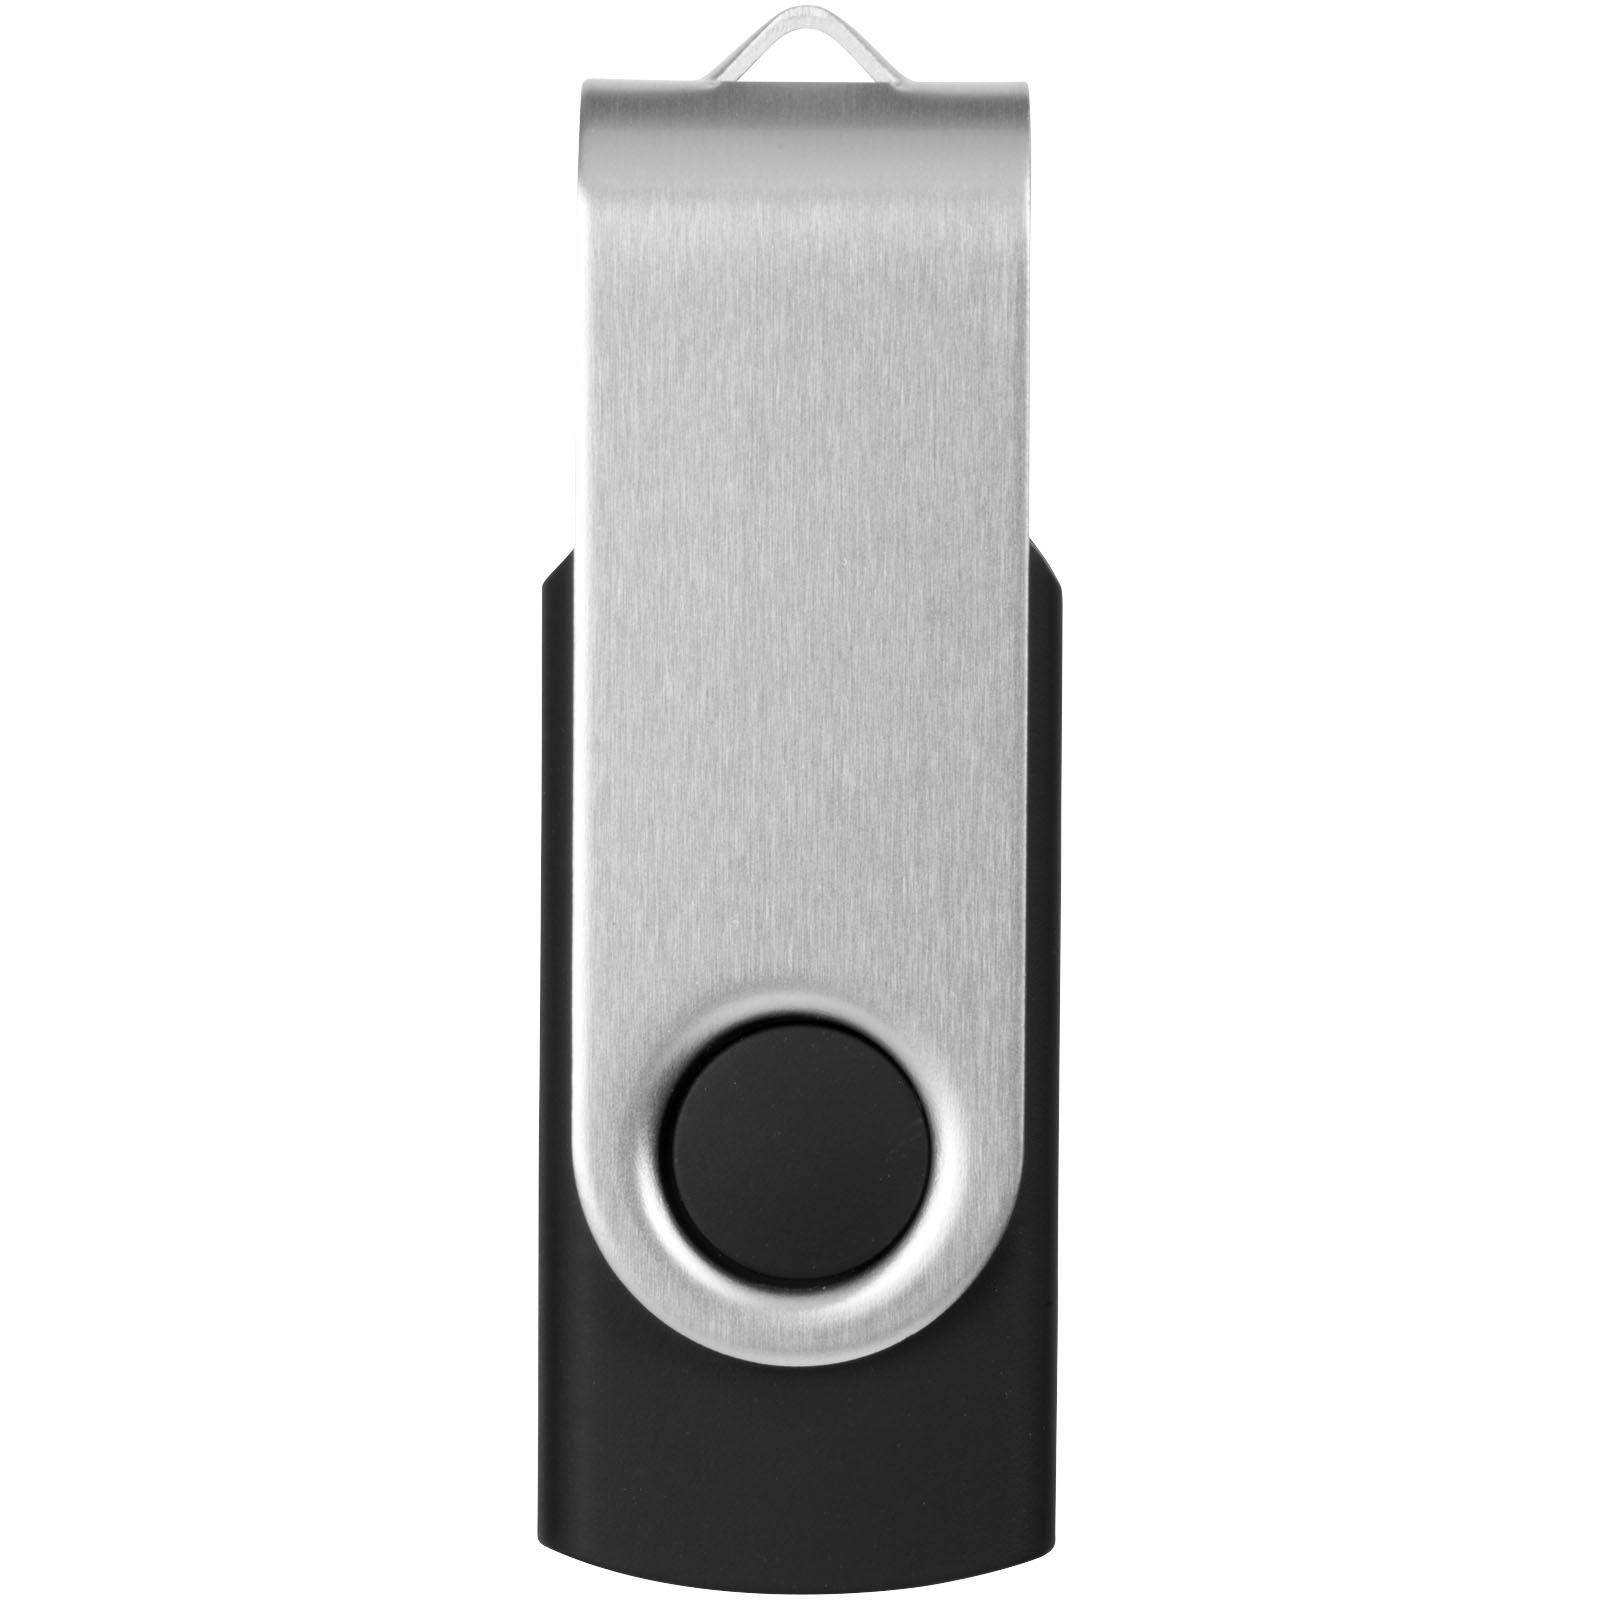 Advertising USB Flash Drives - Rotate-basic 32GB USB flash drive - 3